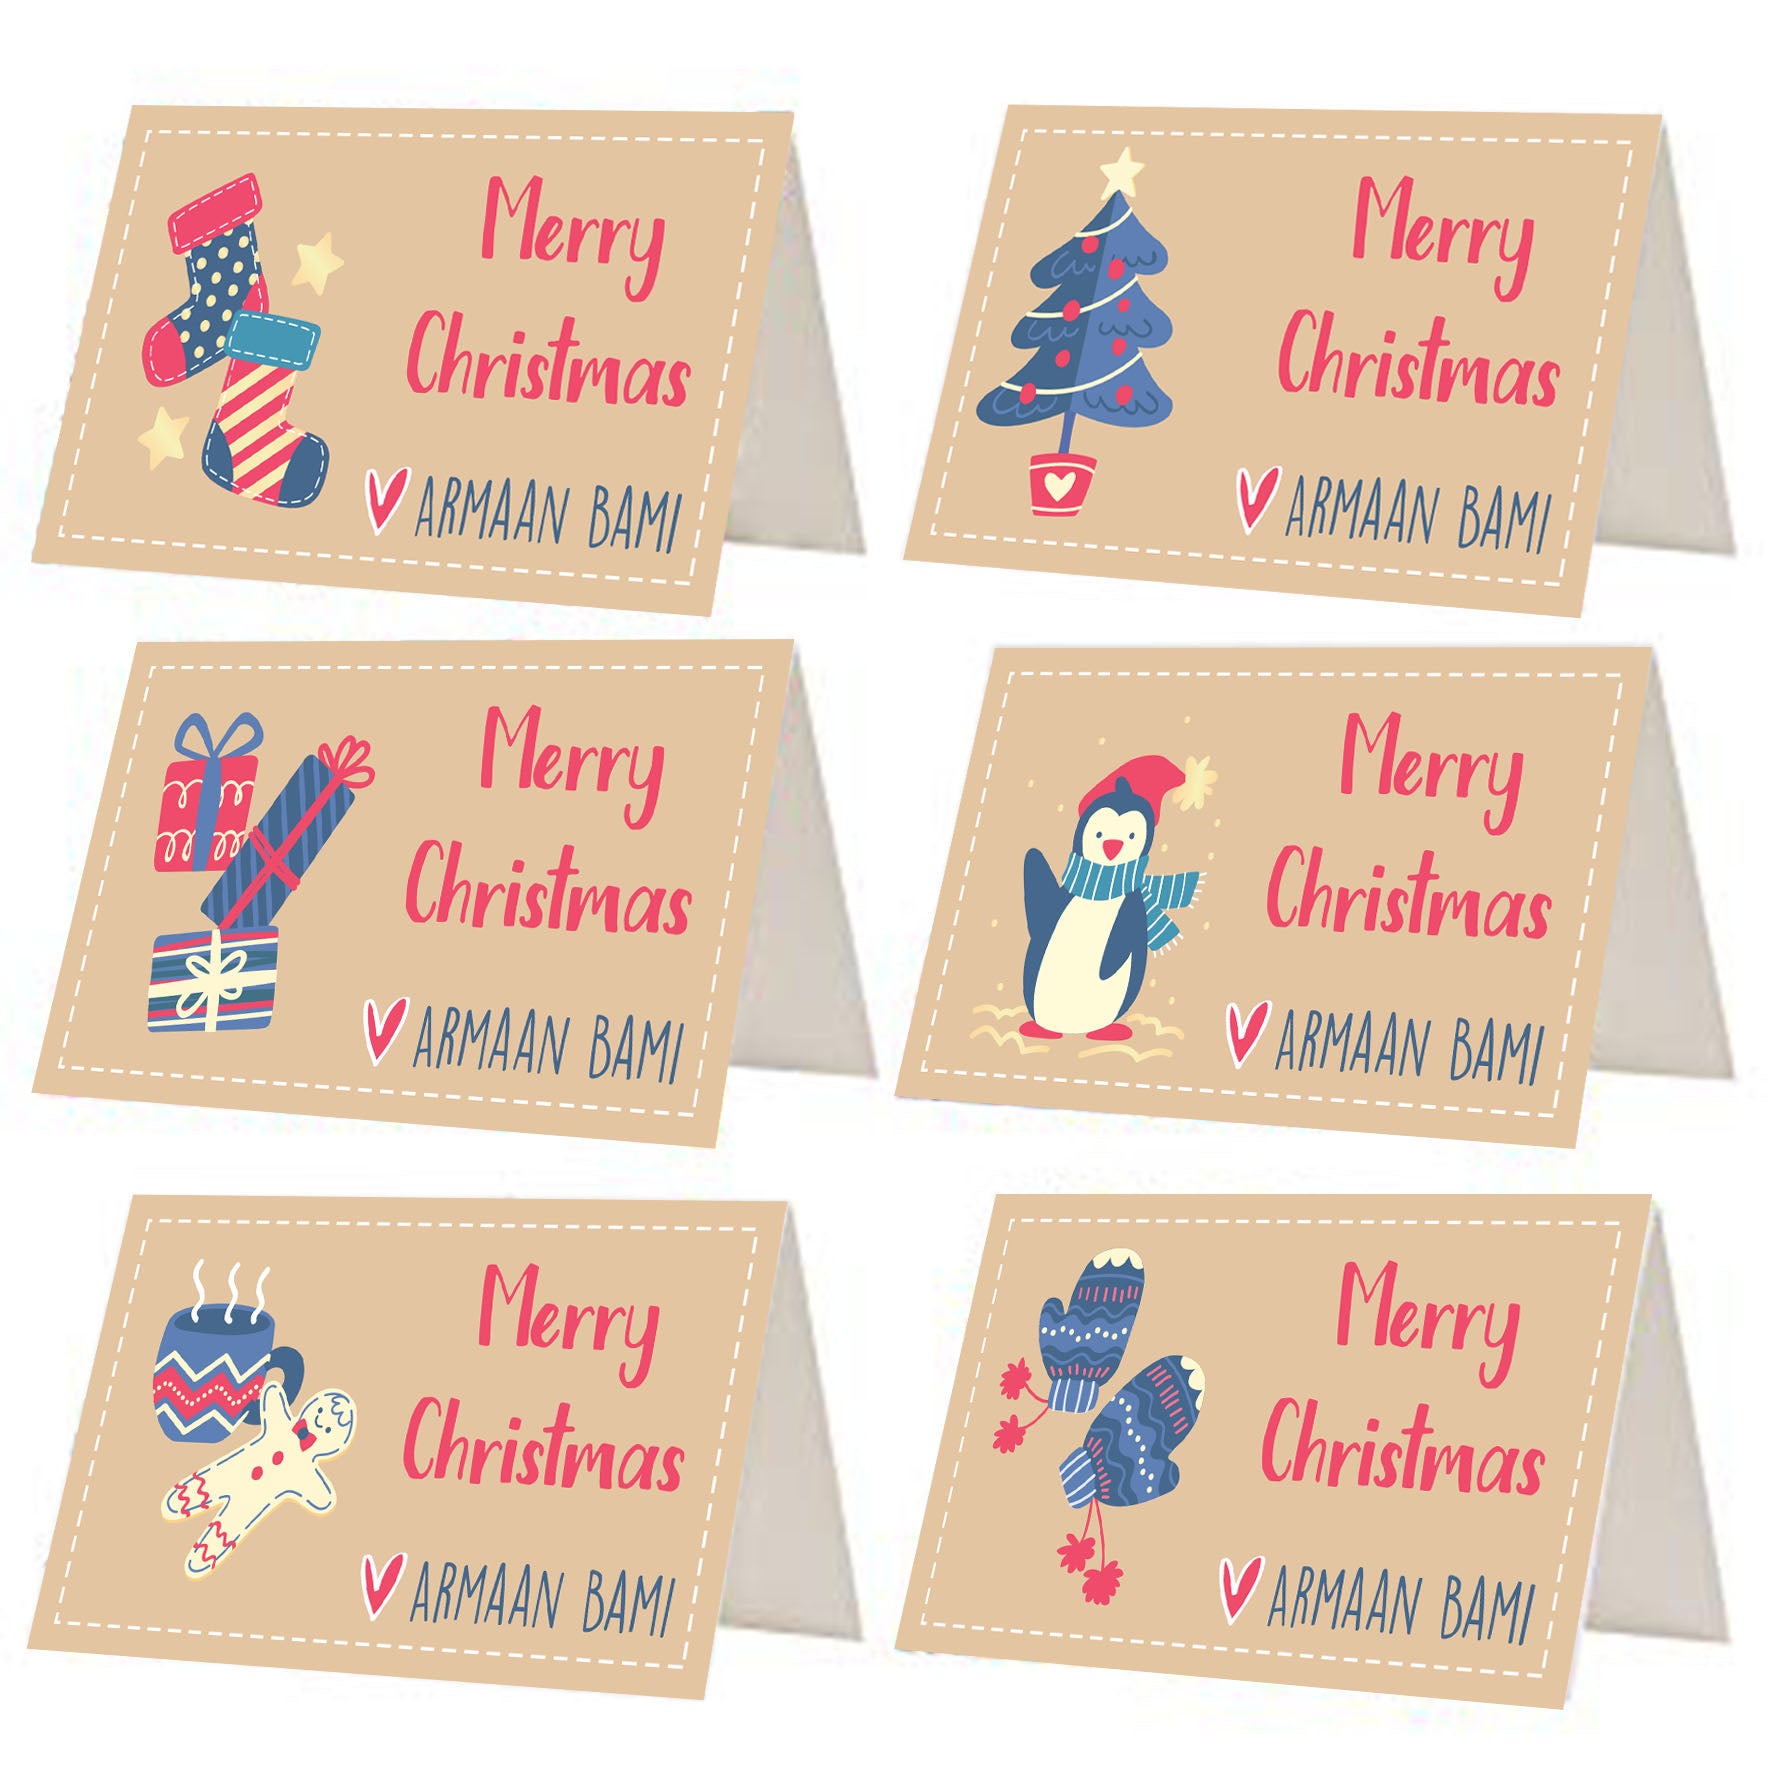 Urbanhand urban hand Personalise Neutral Christmas gift tags season santa teddy bears snowman candy cane reindeer set of 12 and 24